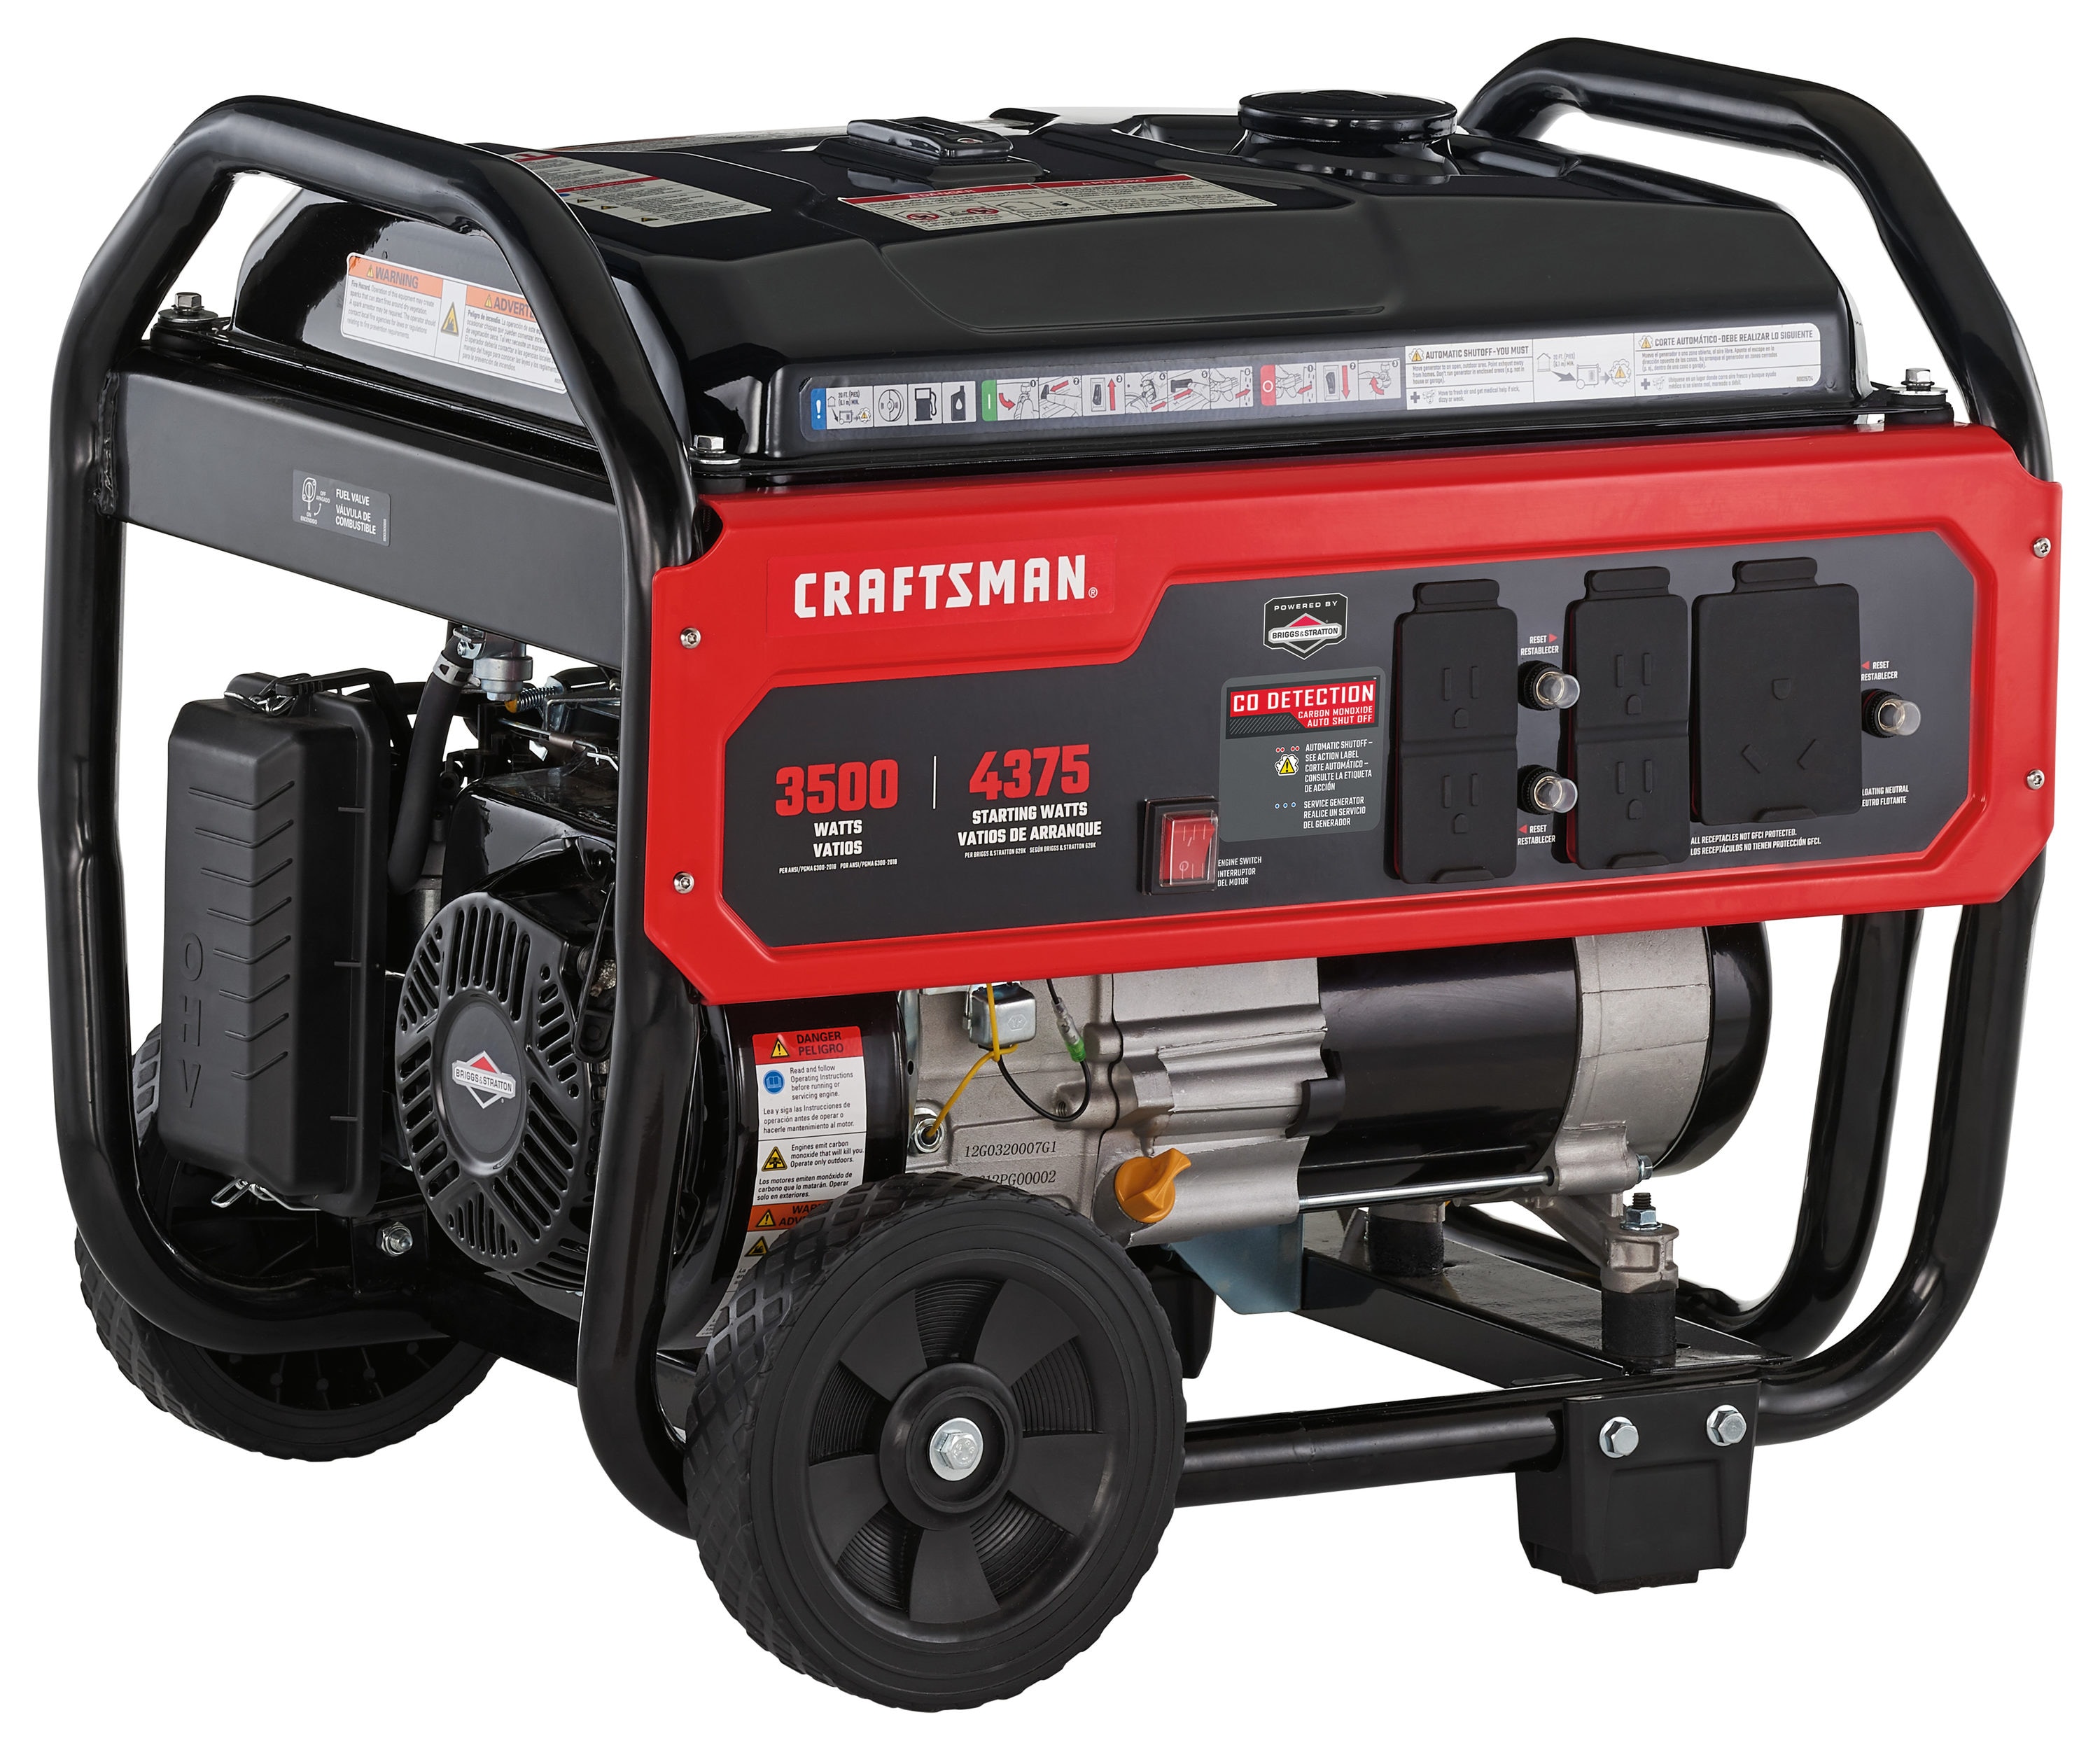 CRAFTSMAN 3500-Watt Portable Generator in the Portable Generators